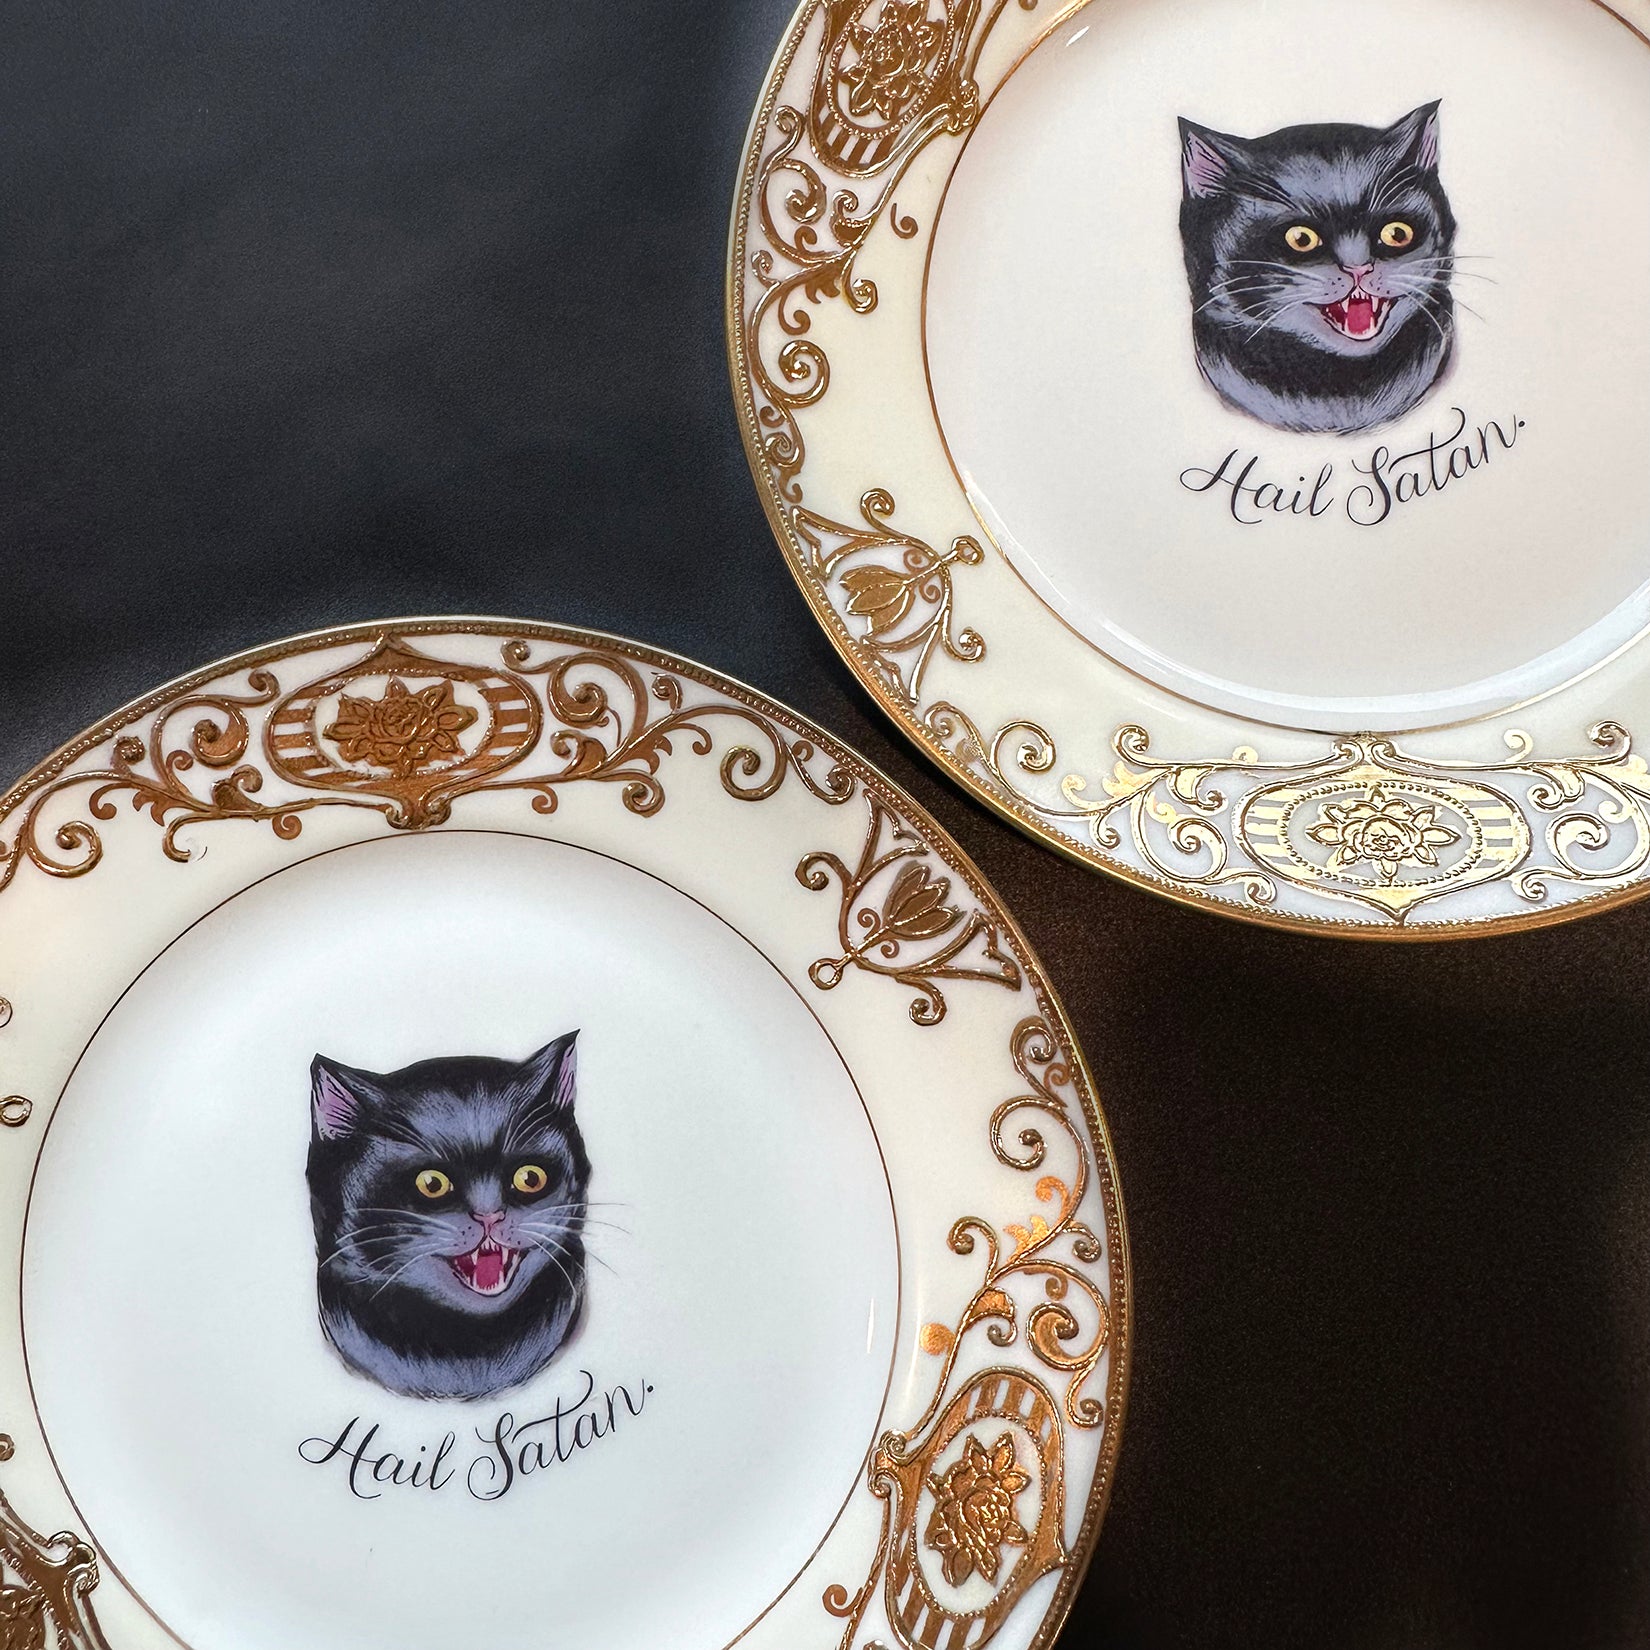 Vintage Art Plate - Small Cat plate - "Hail Satan"